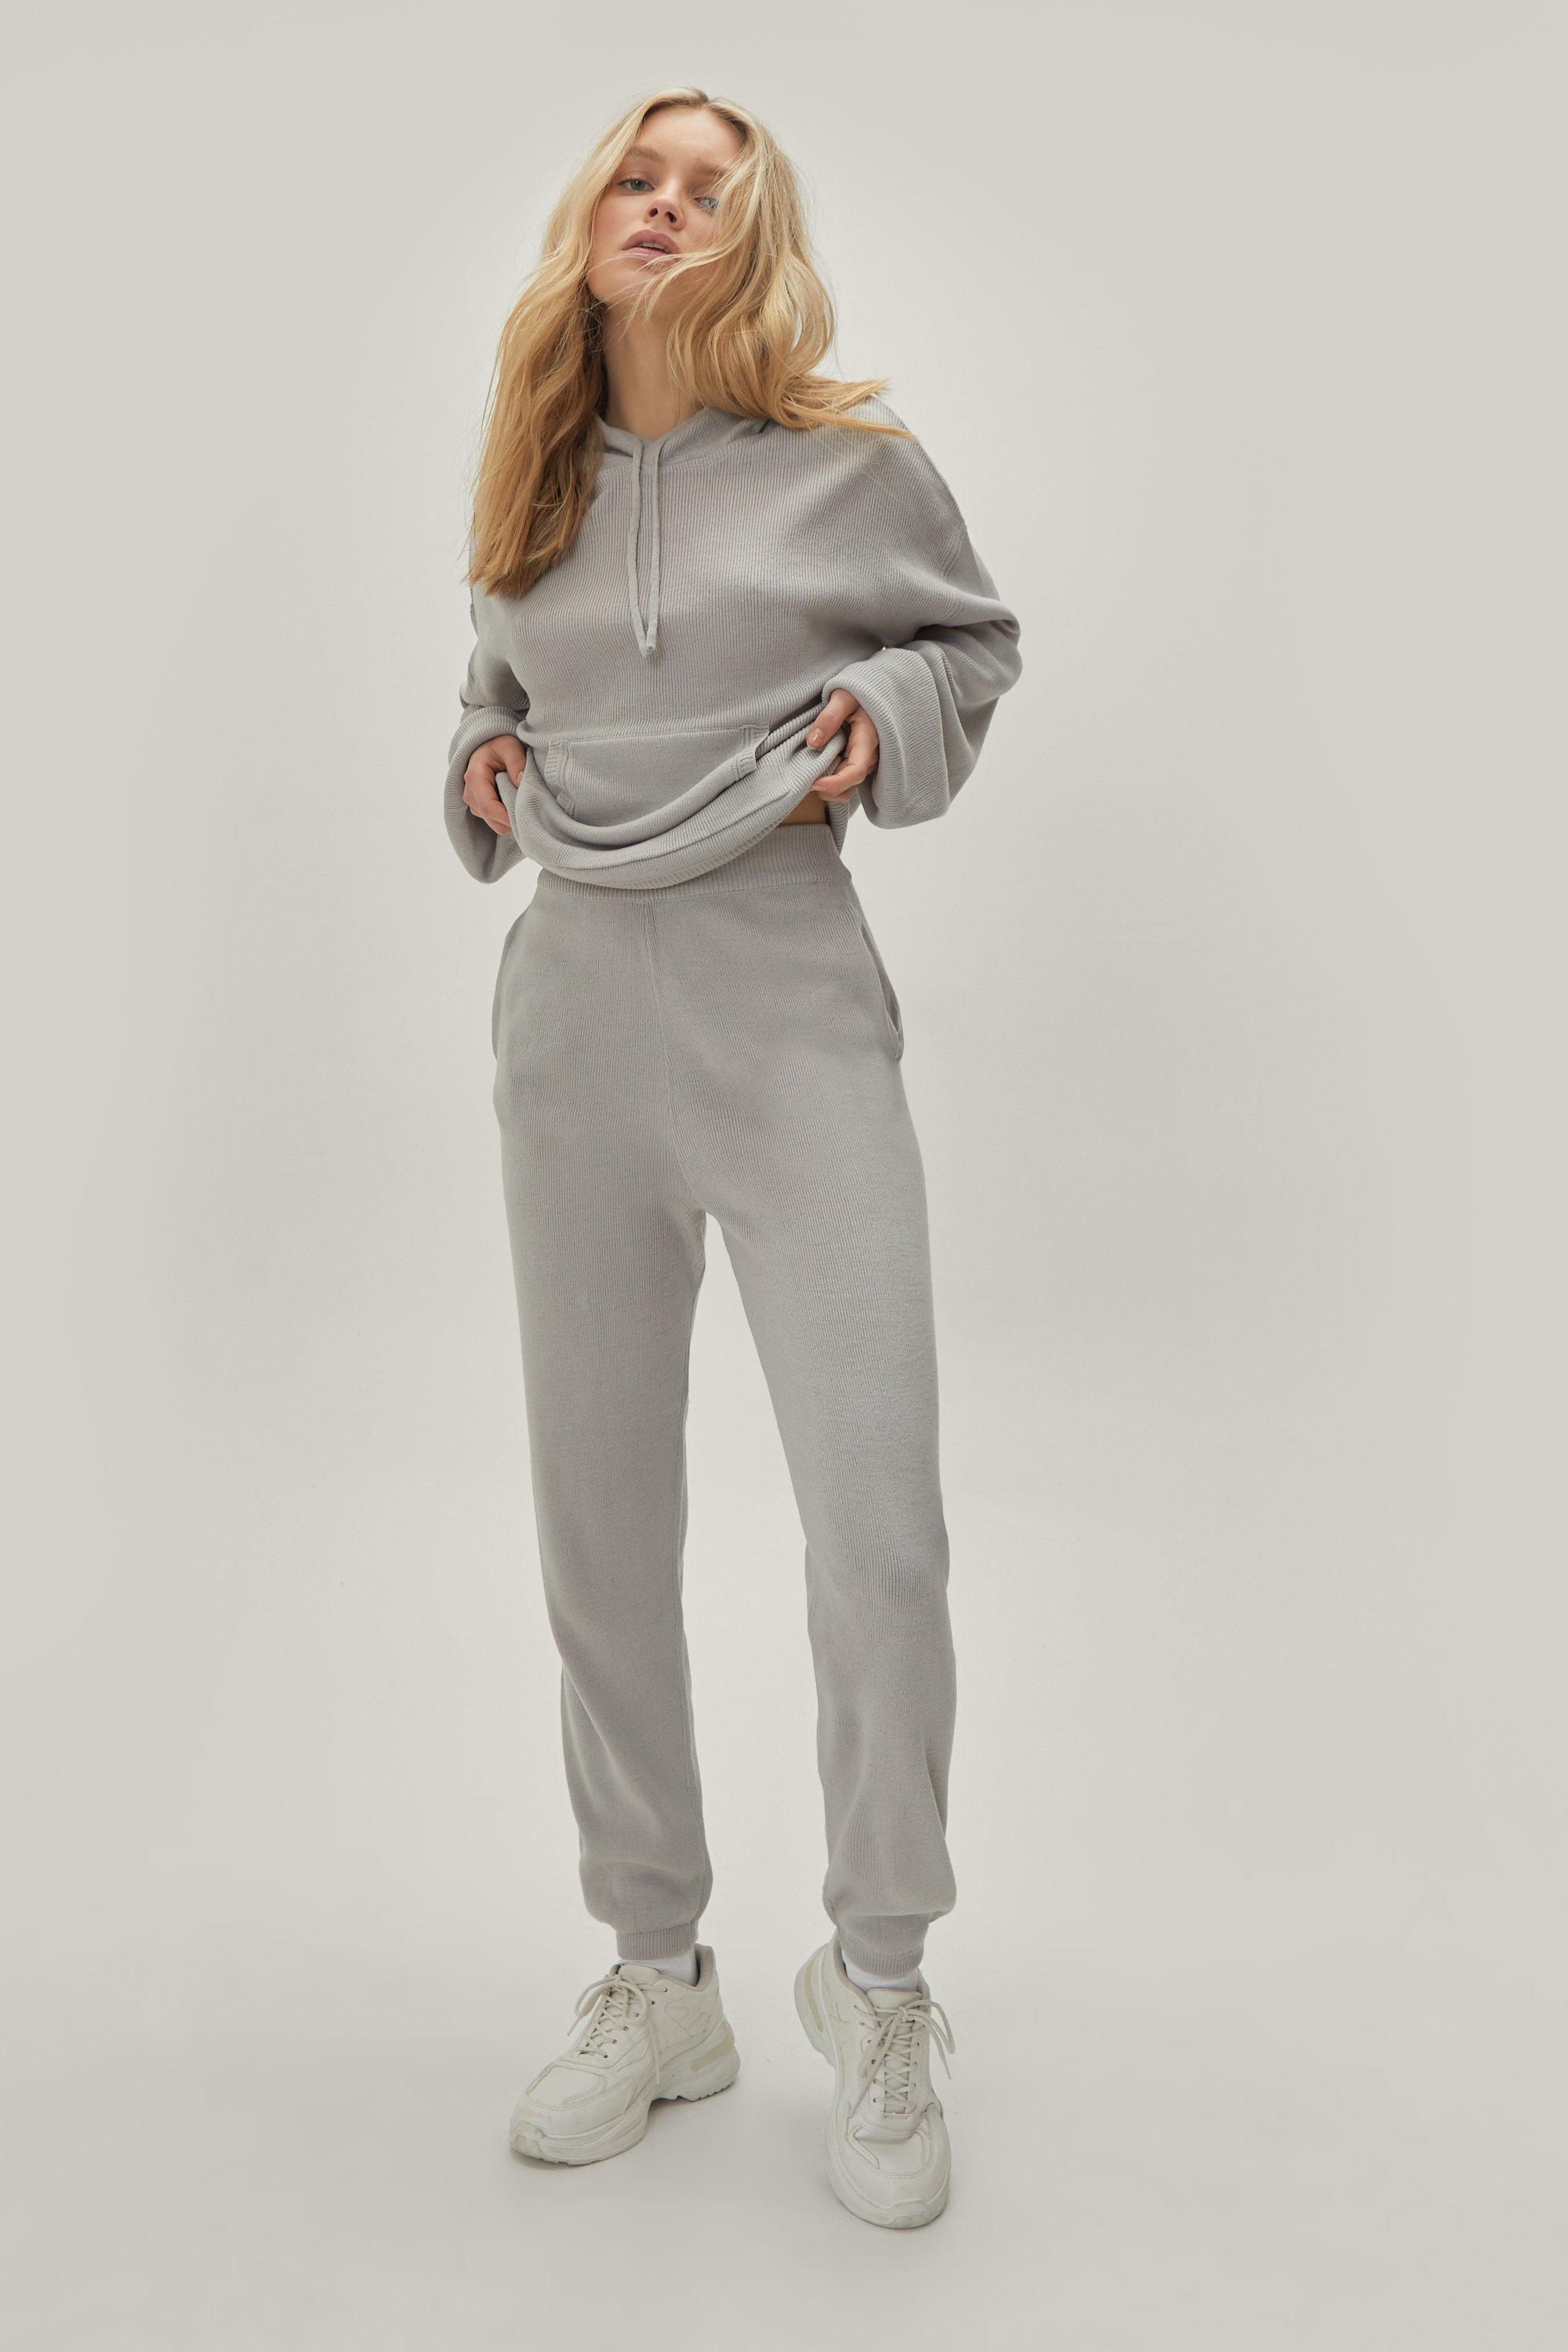 ASOS DESIGN set quilted sweatpants in pale khaki